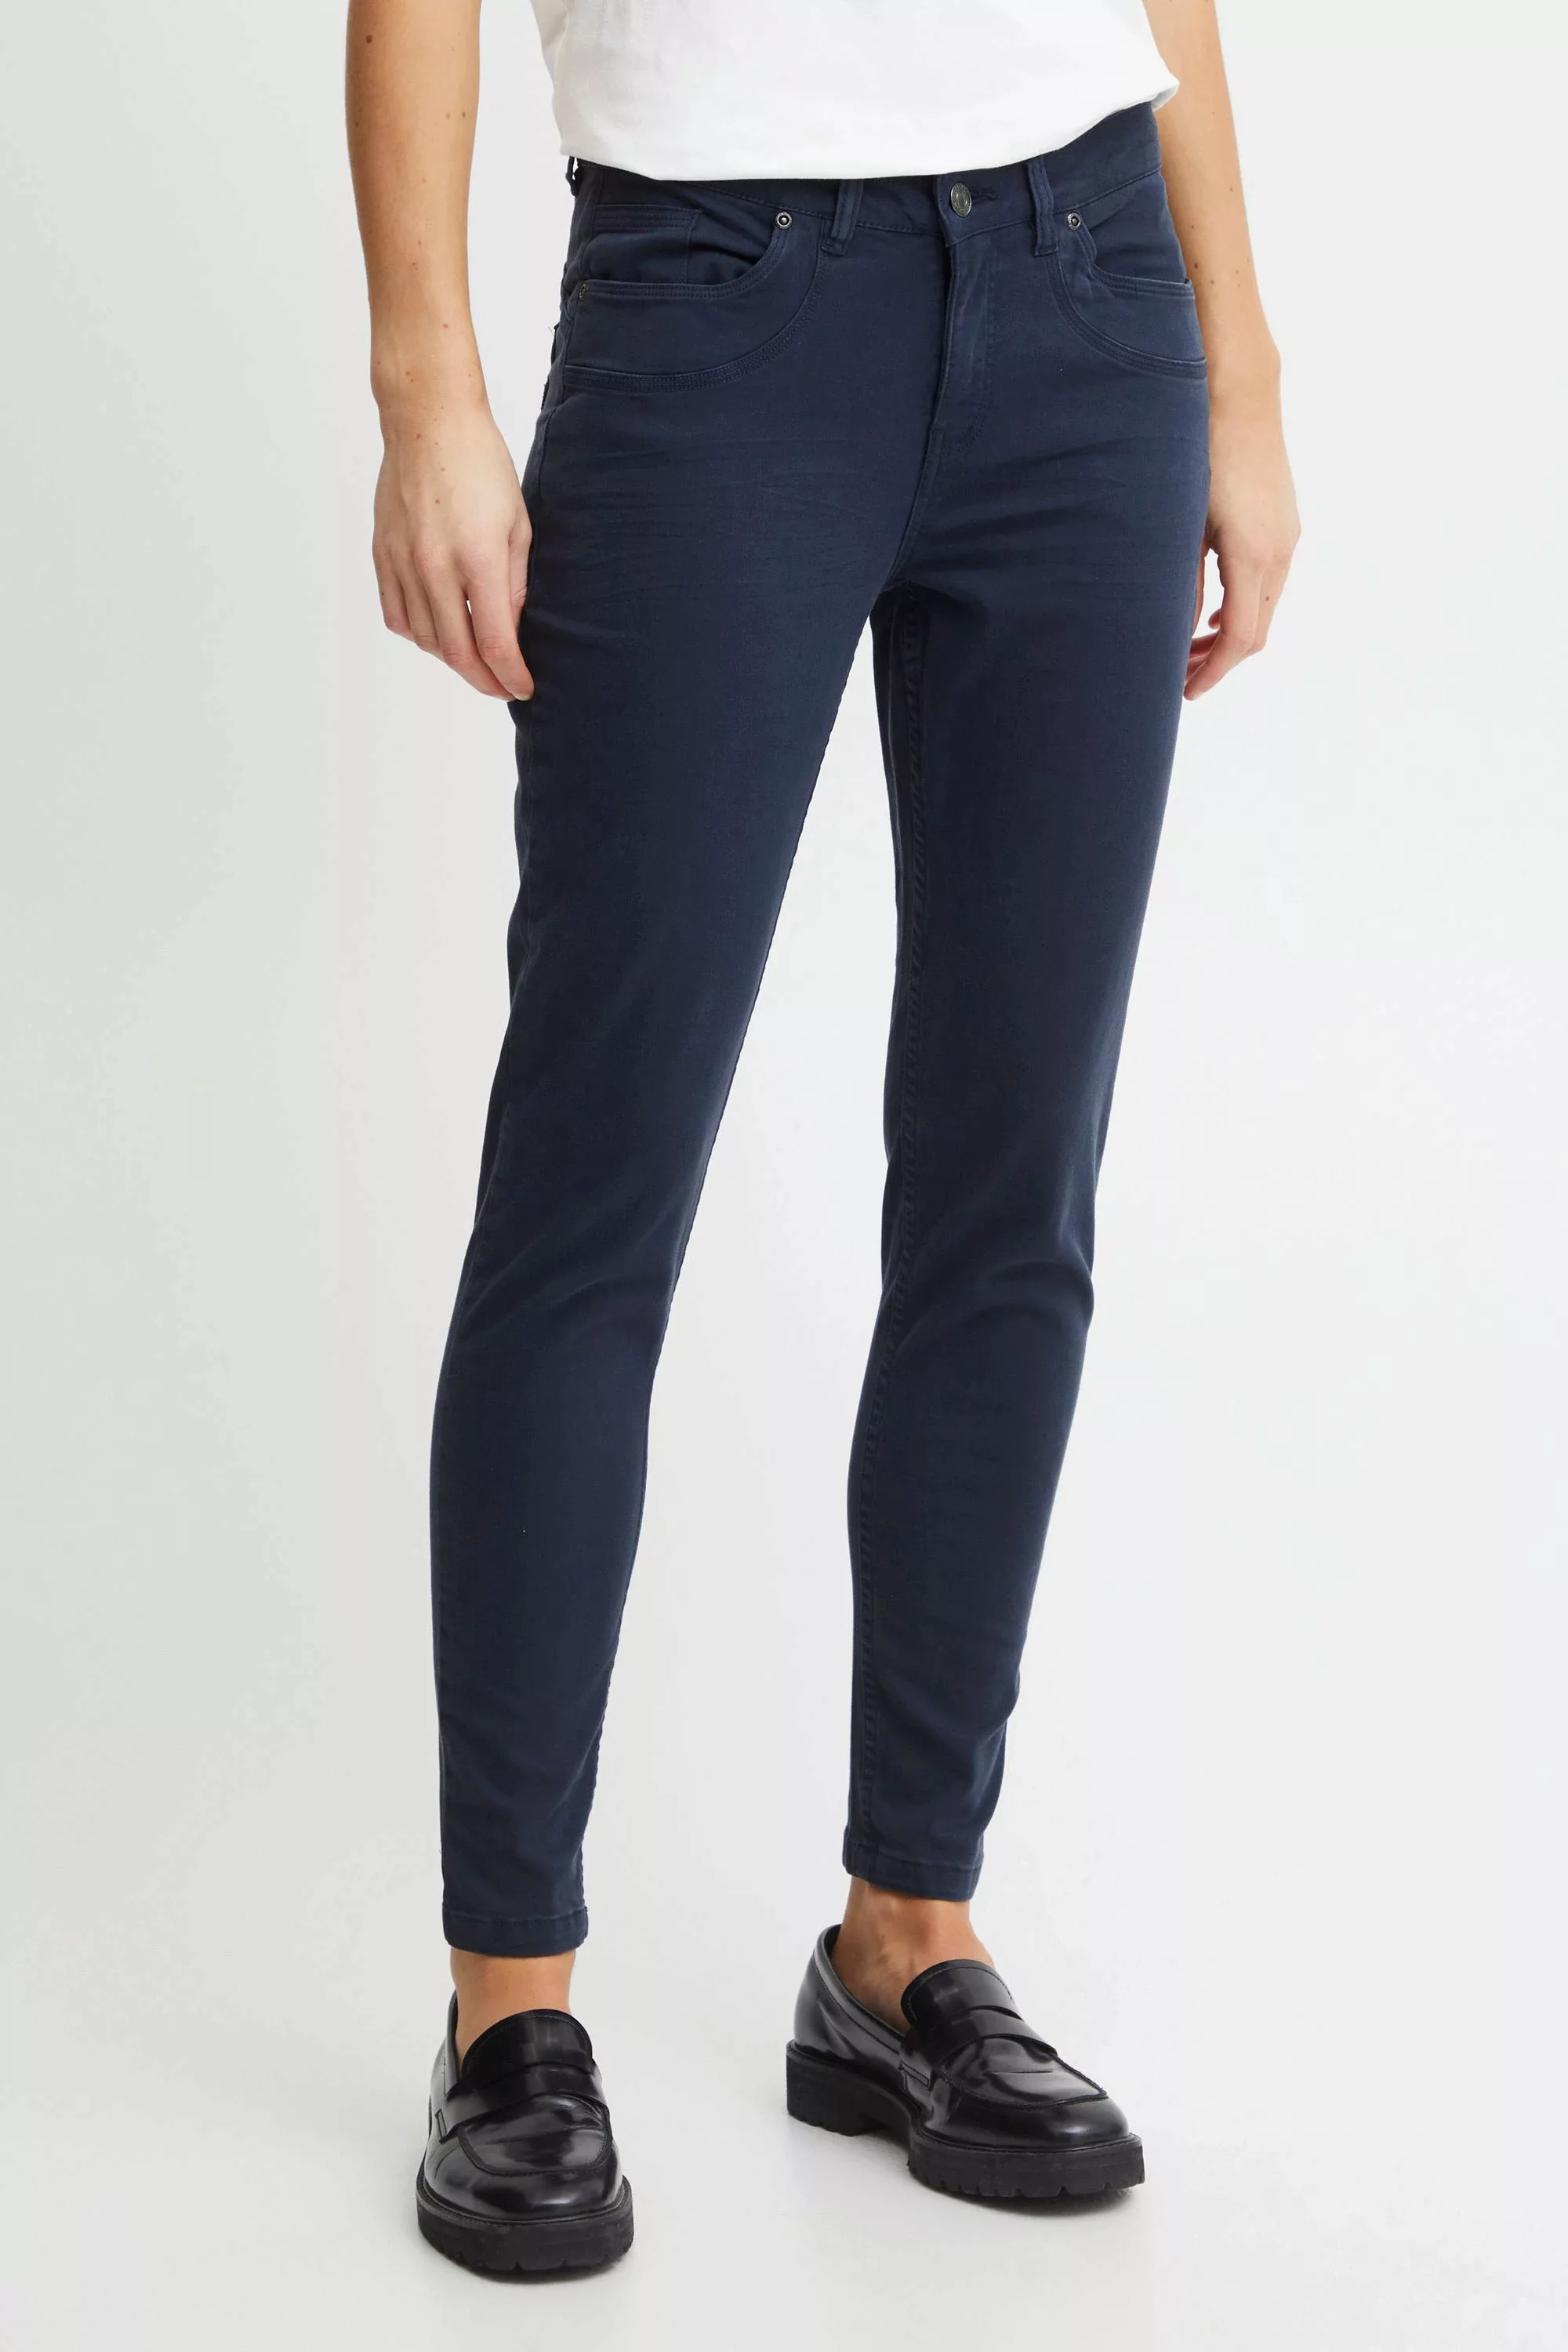 fransa 5-Pocket-Jeans "Fransa FRFOTWILL 2 Pants - 20610422" günstig online kaufen